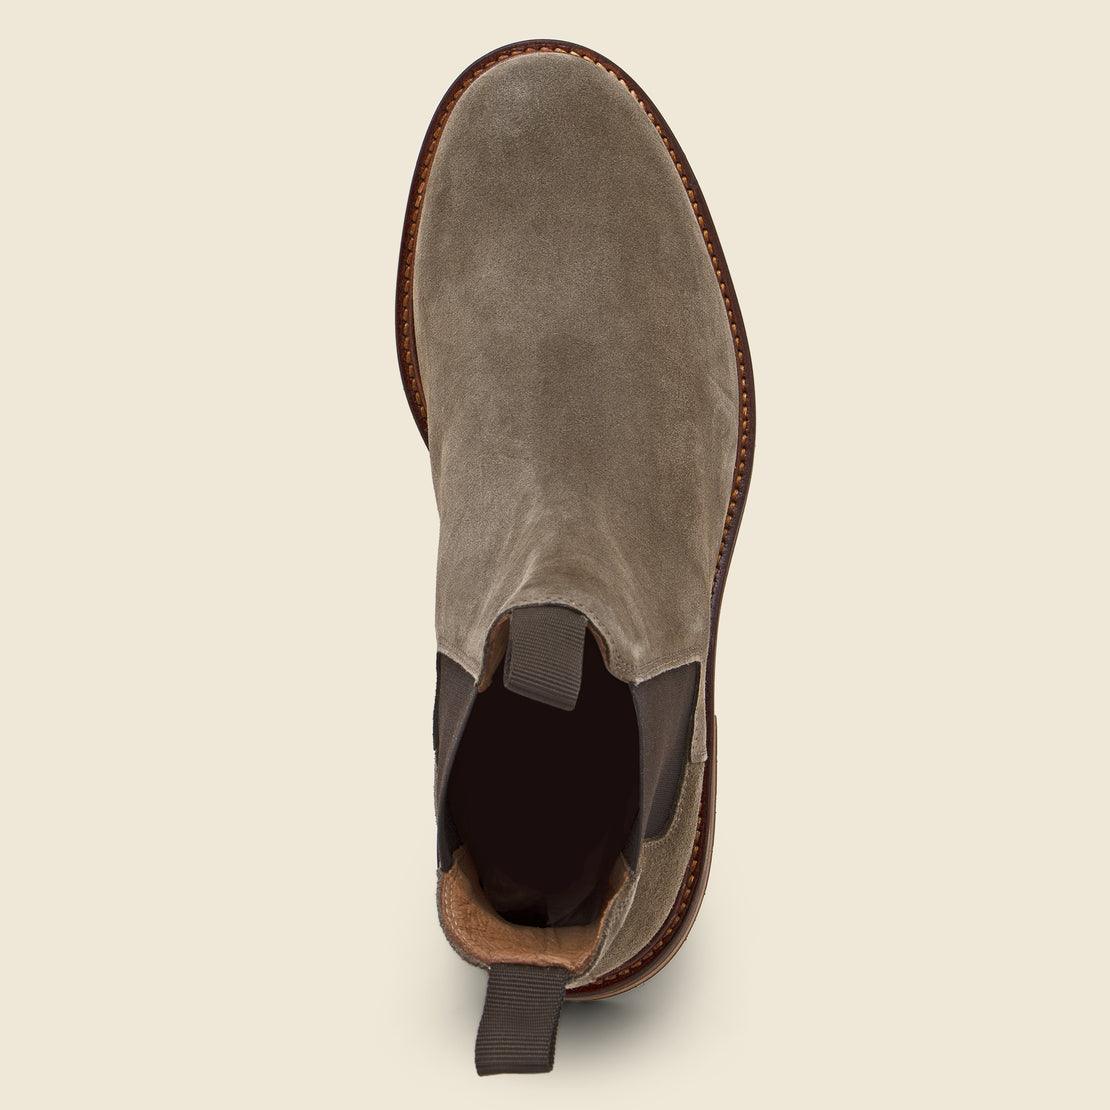 Shoe The Bear Dev Suede Chelsea Boots, Neutral